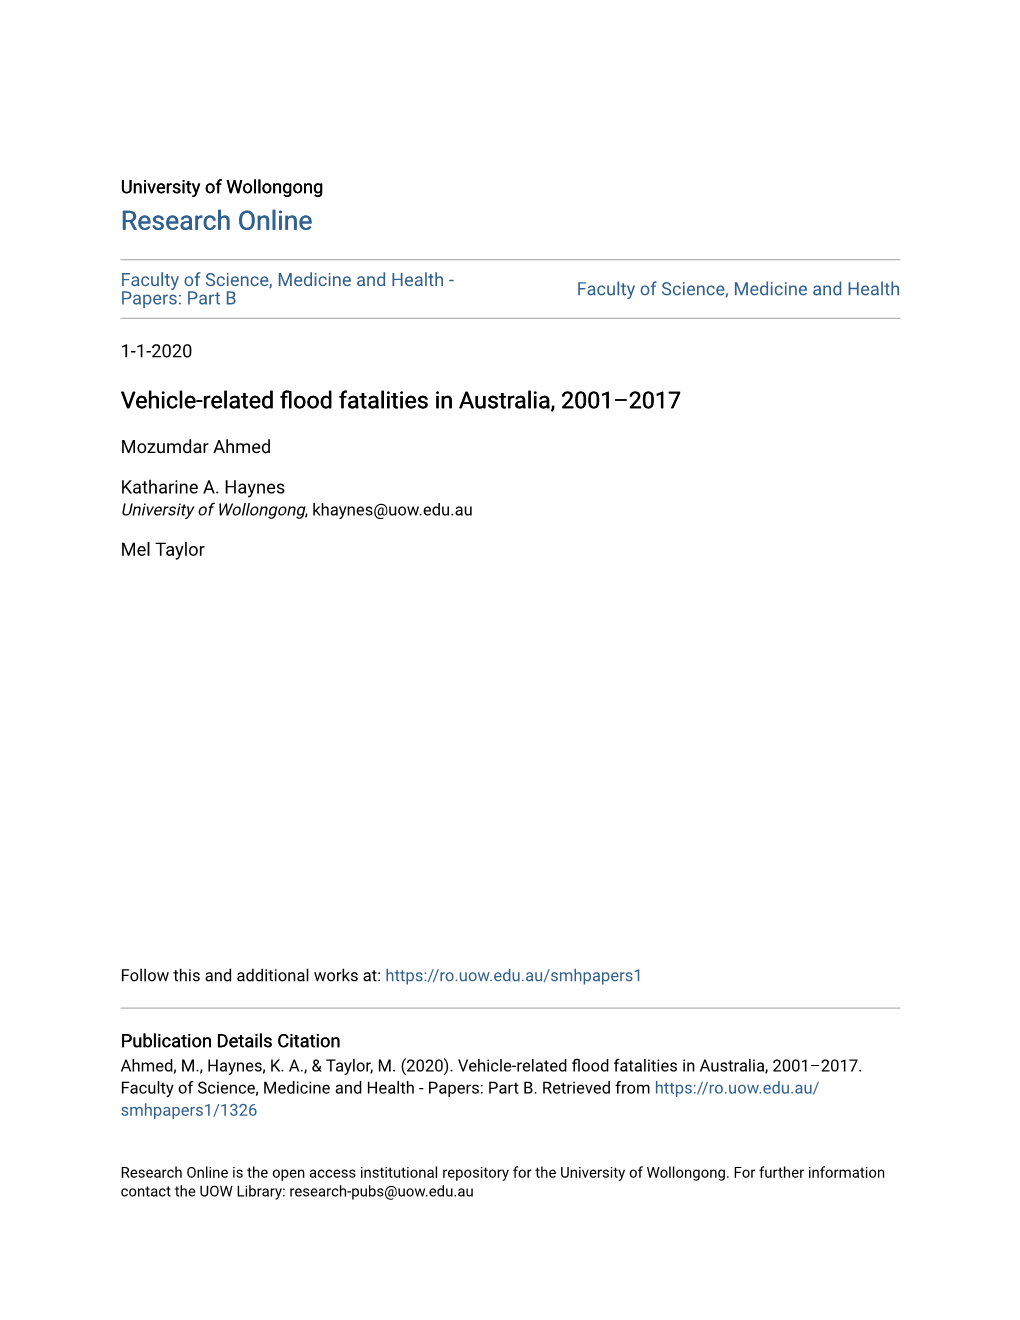 Vehicle-Related Flood Fatalities in Australia, 2001–2017